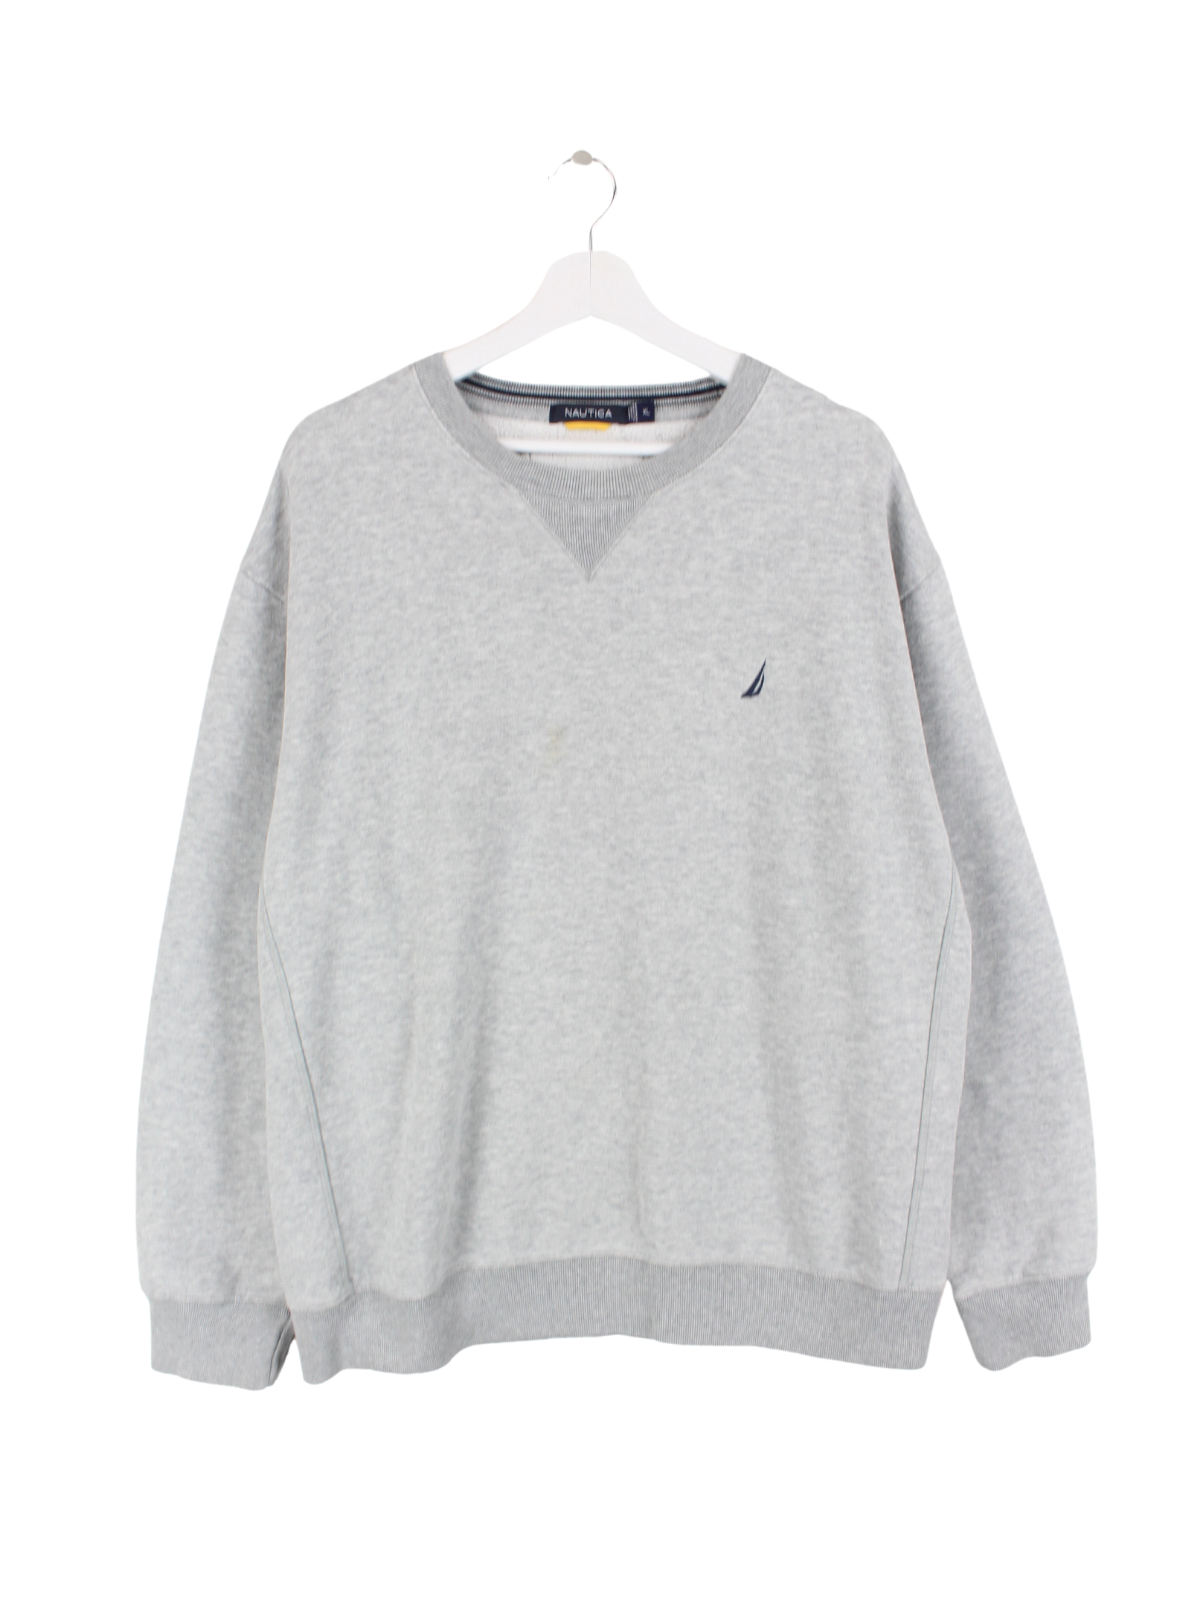 Nautica Basic Sweater Grau XL